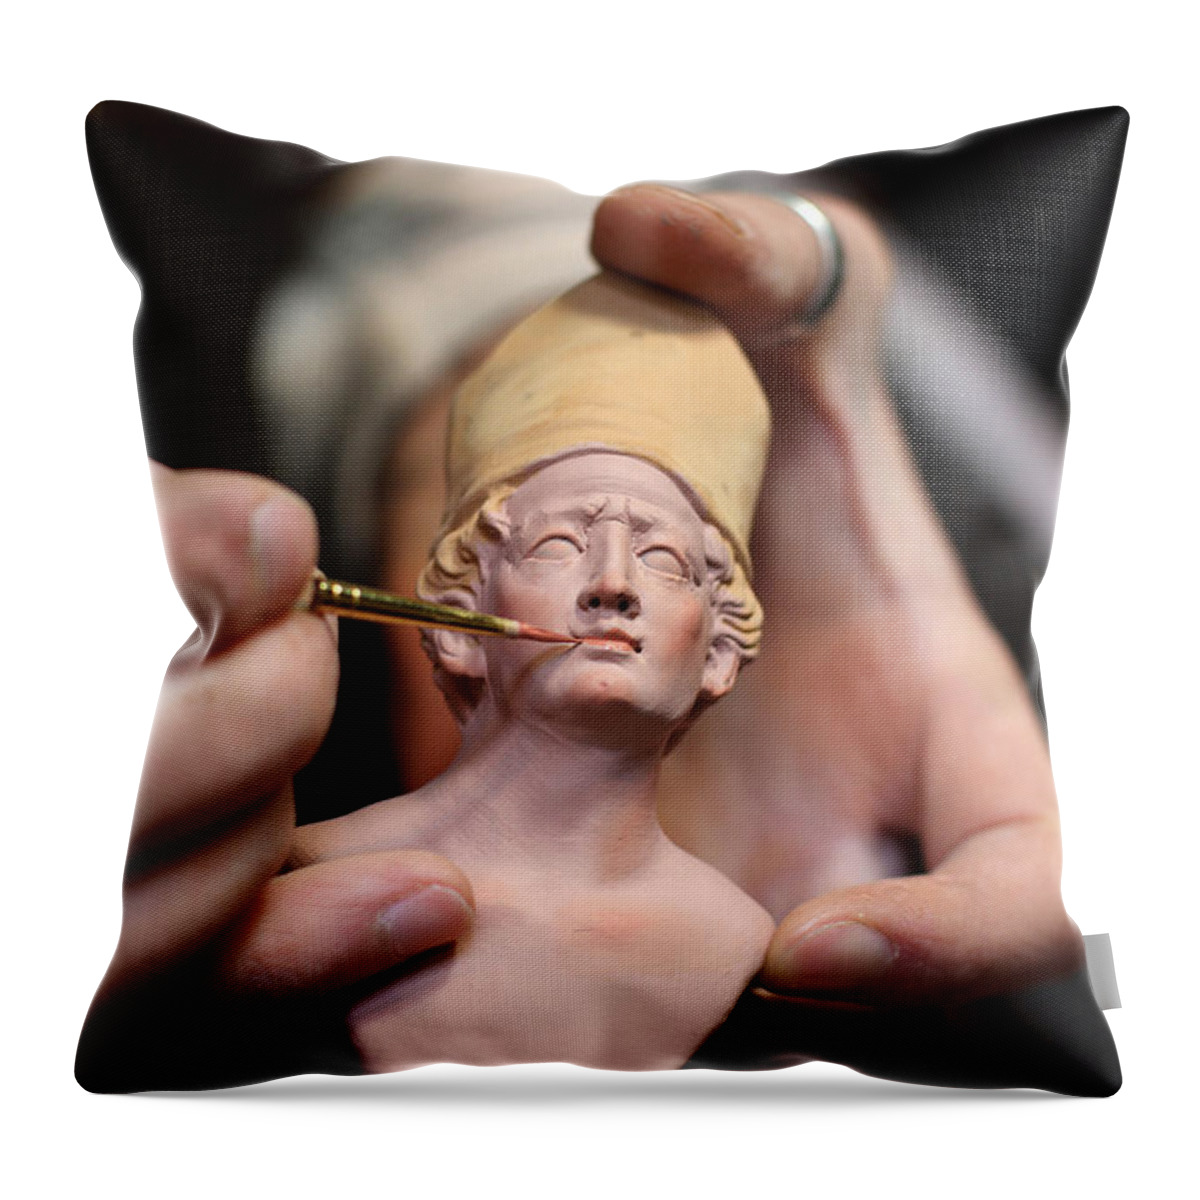 Estock Throw Pillow featuring the digital art Ferrigno's Shop, Naples, Italy by Antonio Capone